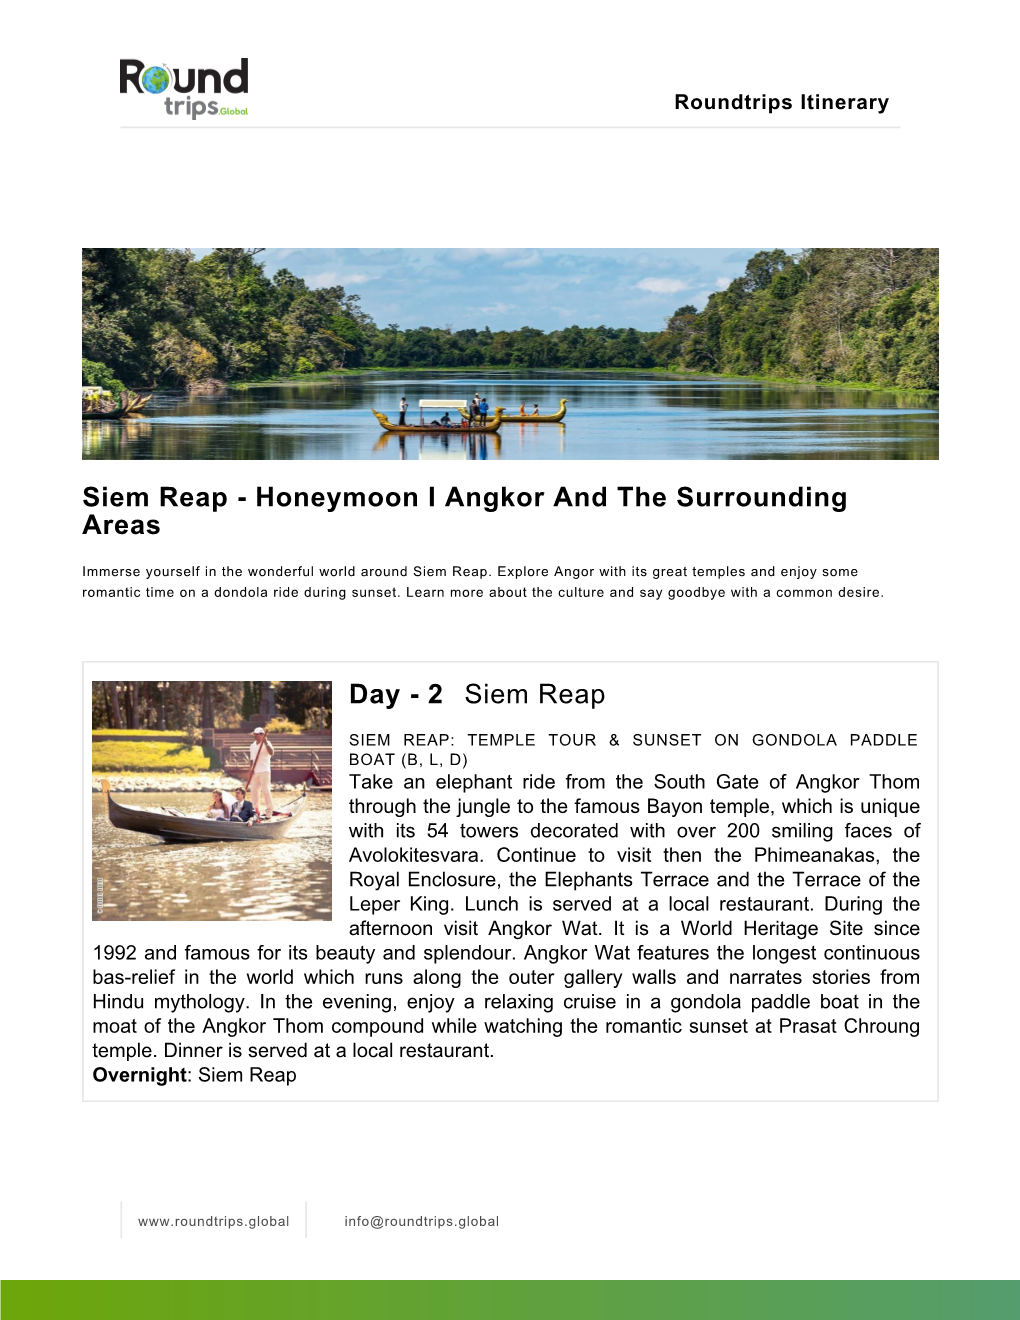 Siem Reap - Honeymoon I Angkor and the Surrounding Areas